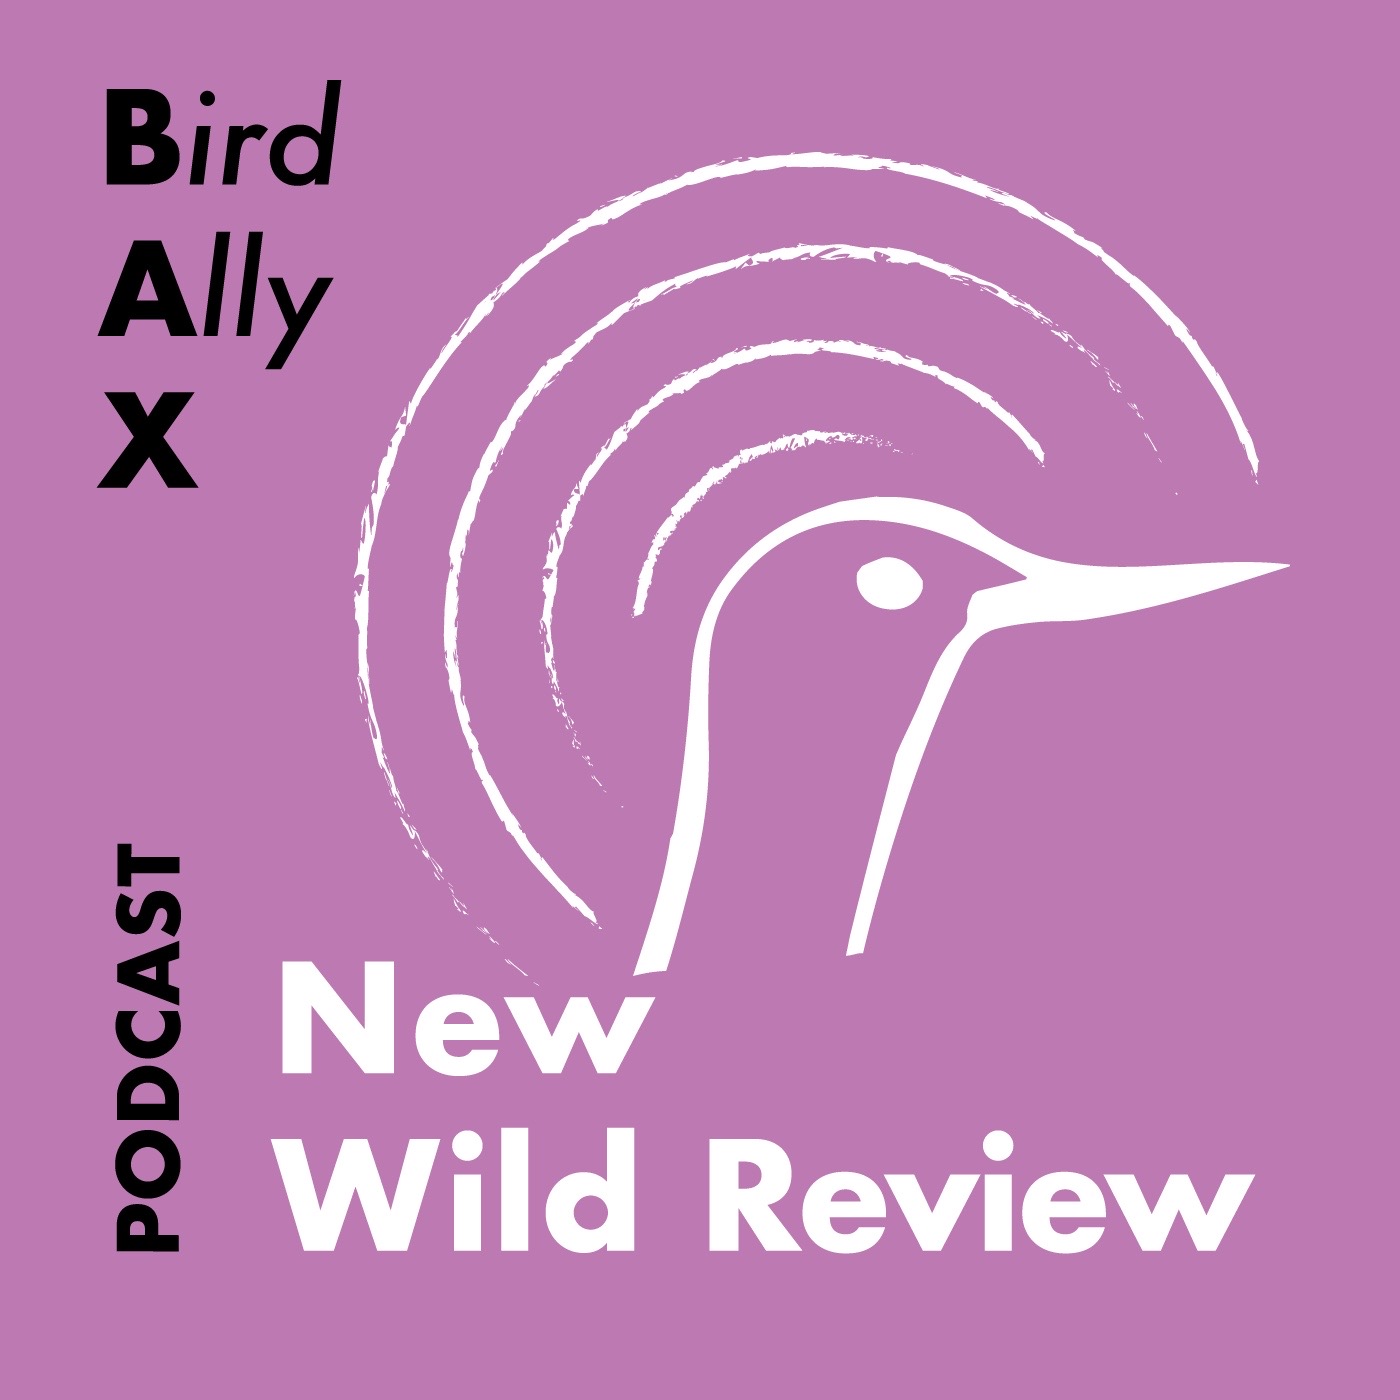 Bird Ally X: New Wild Review